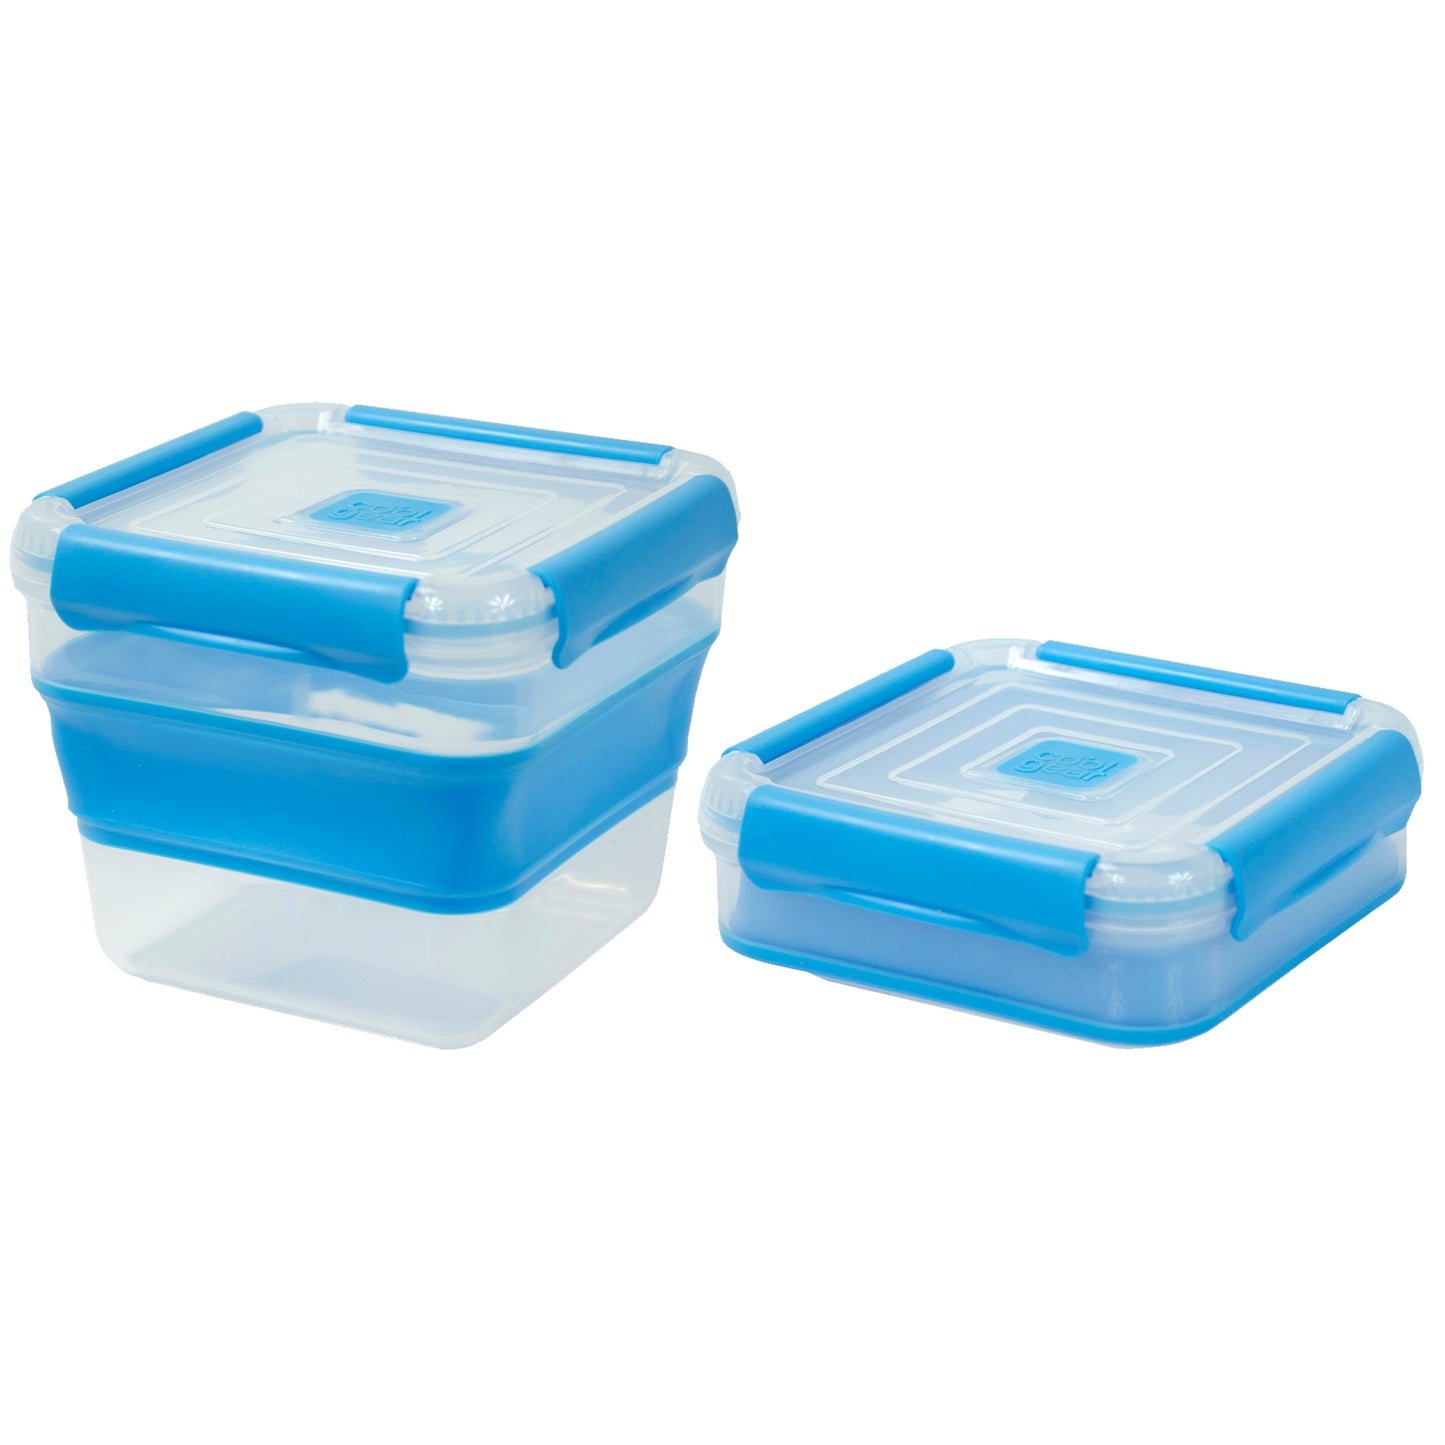 Food Storage Container Organizer w/ Soft-Close - Fits Best in B24